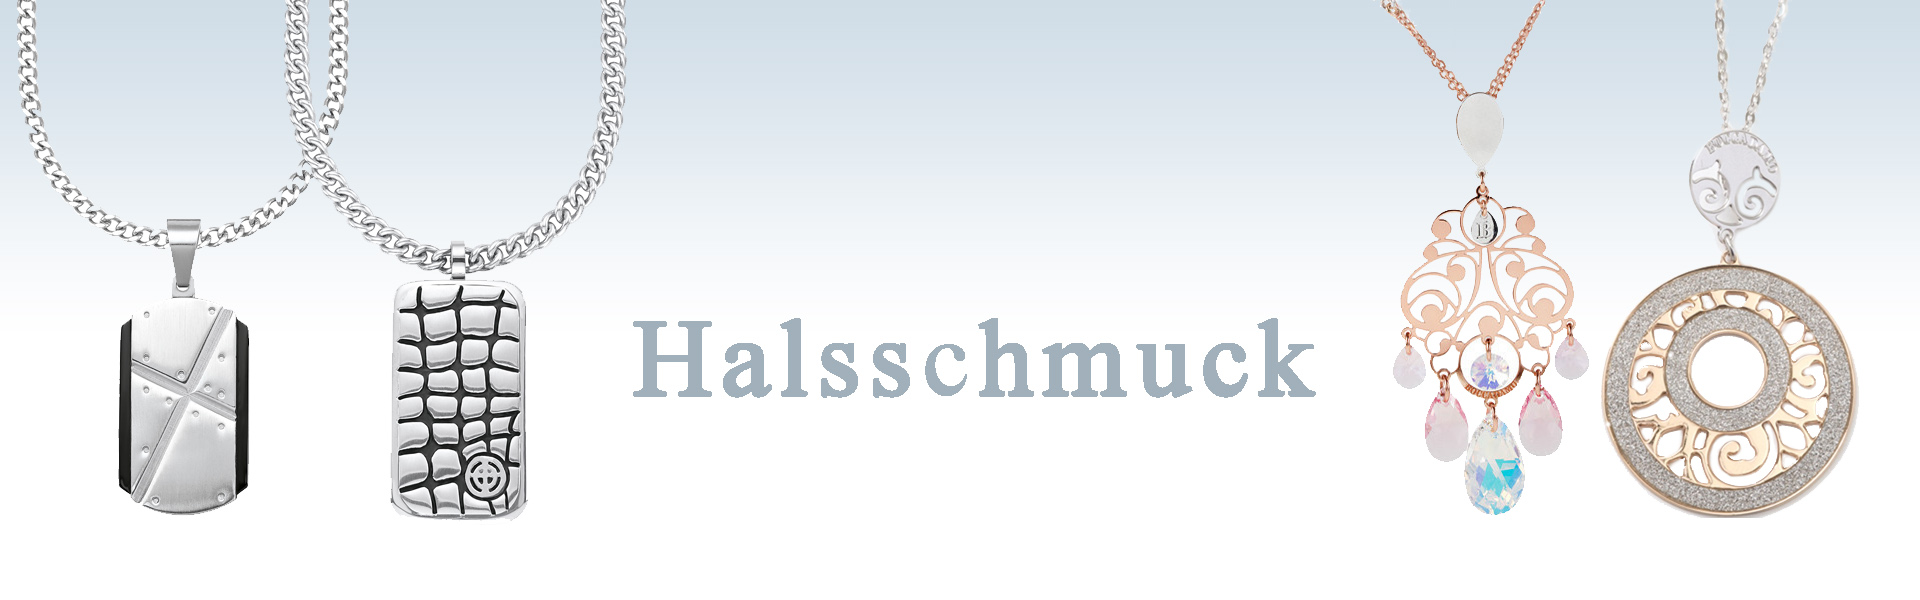 Halsschmuck